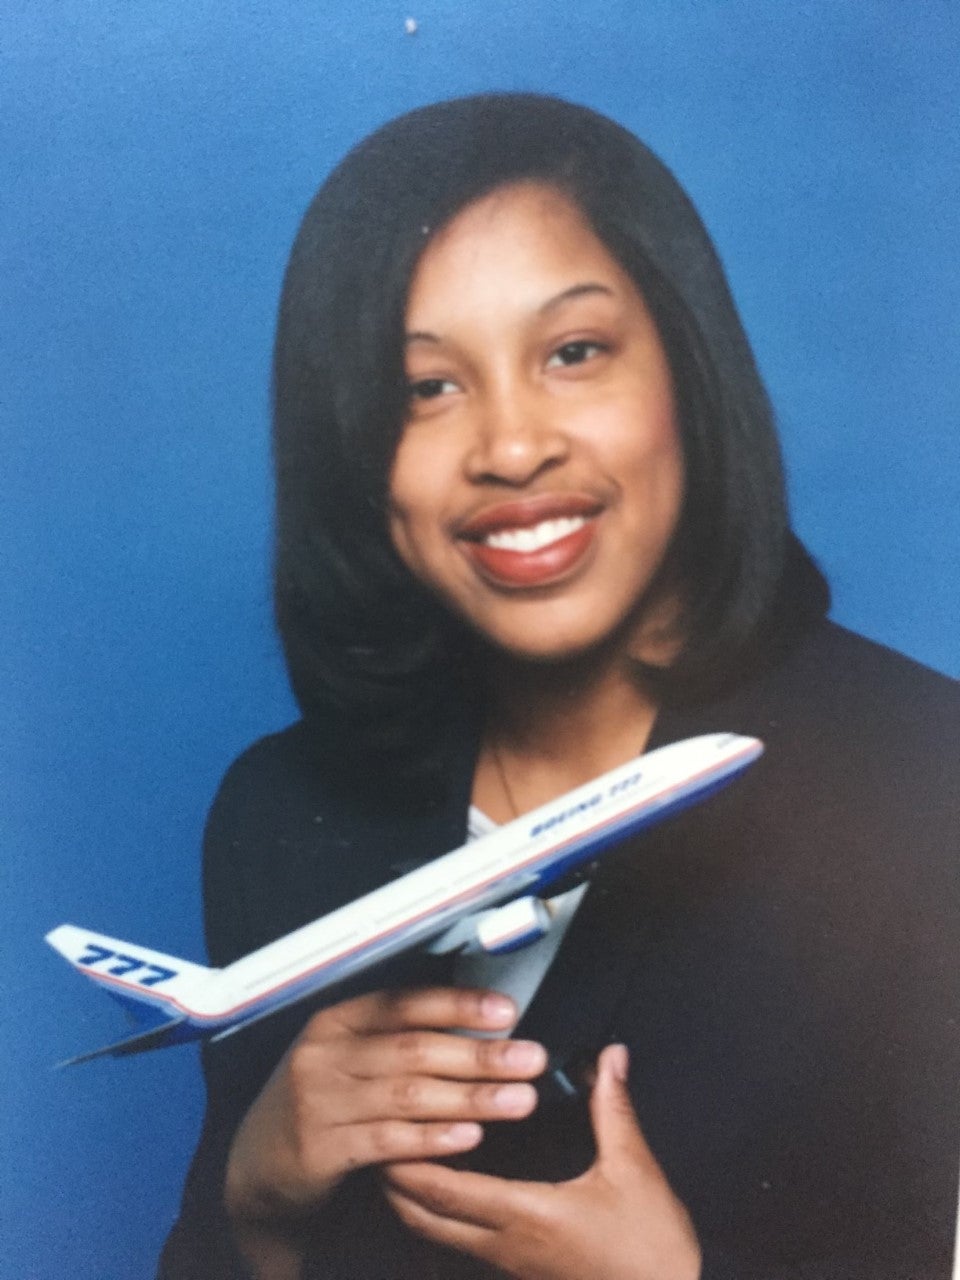 The Disruptors: Captain Nia Gilliam-Wordlaw Is Blazing A Trail For Black Women Pilots